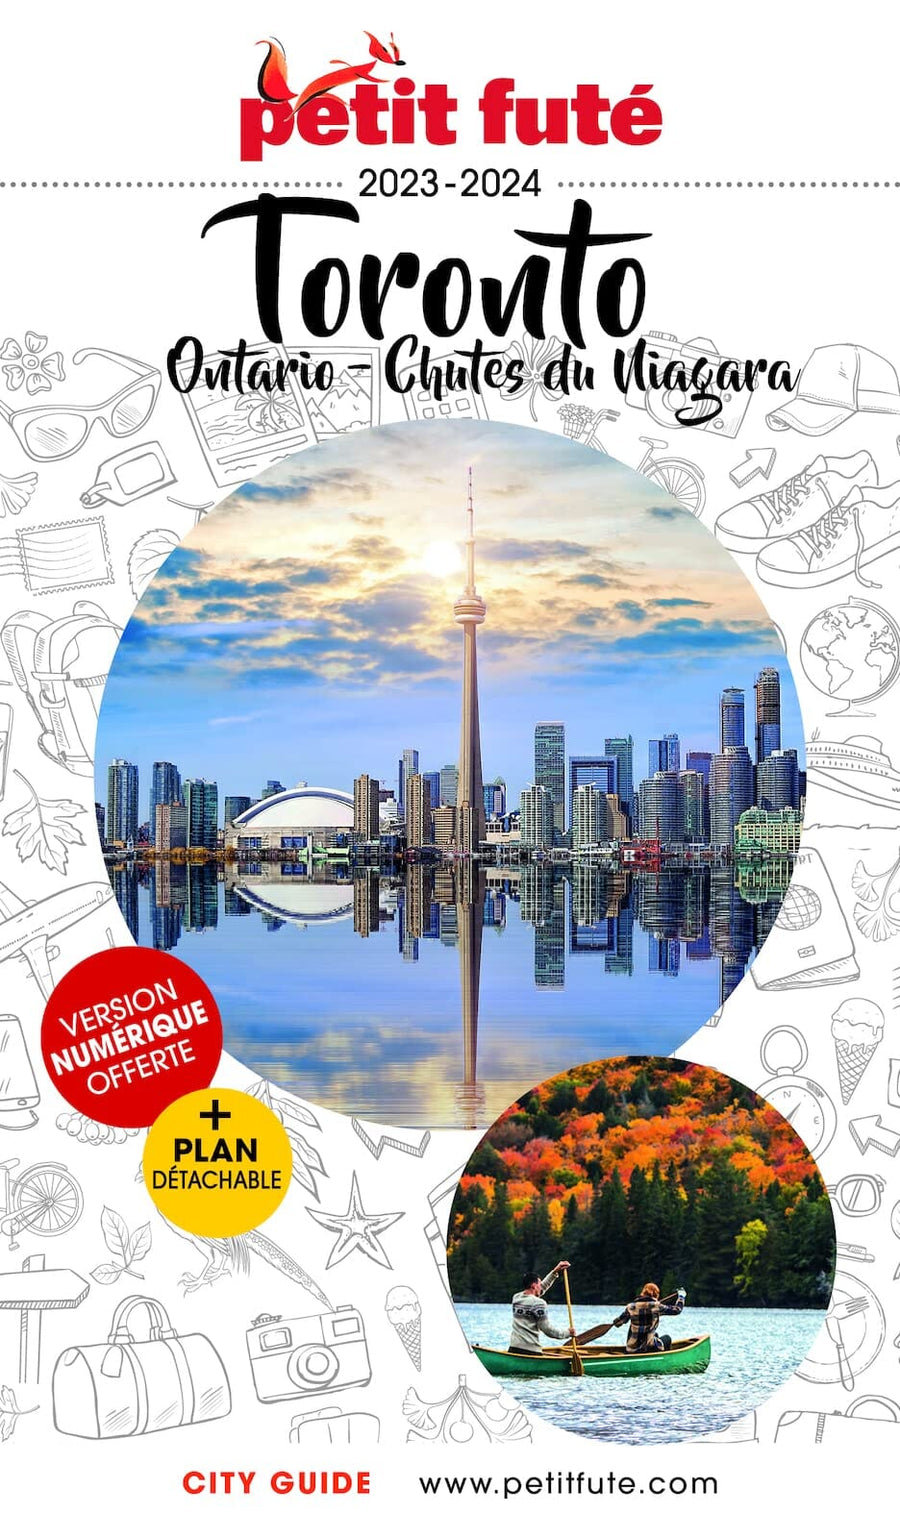 Guide de voyage - Toronto & Chutes du Niagara 2023/24 | Petit Futé guide de voyage Petit Futé 